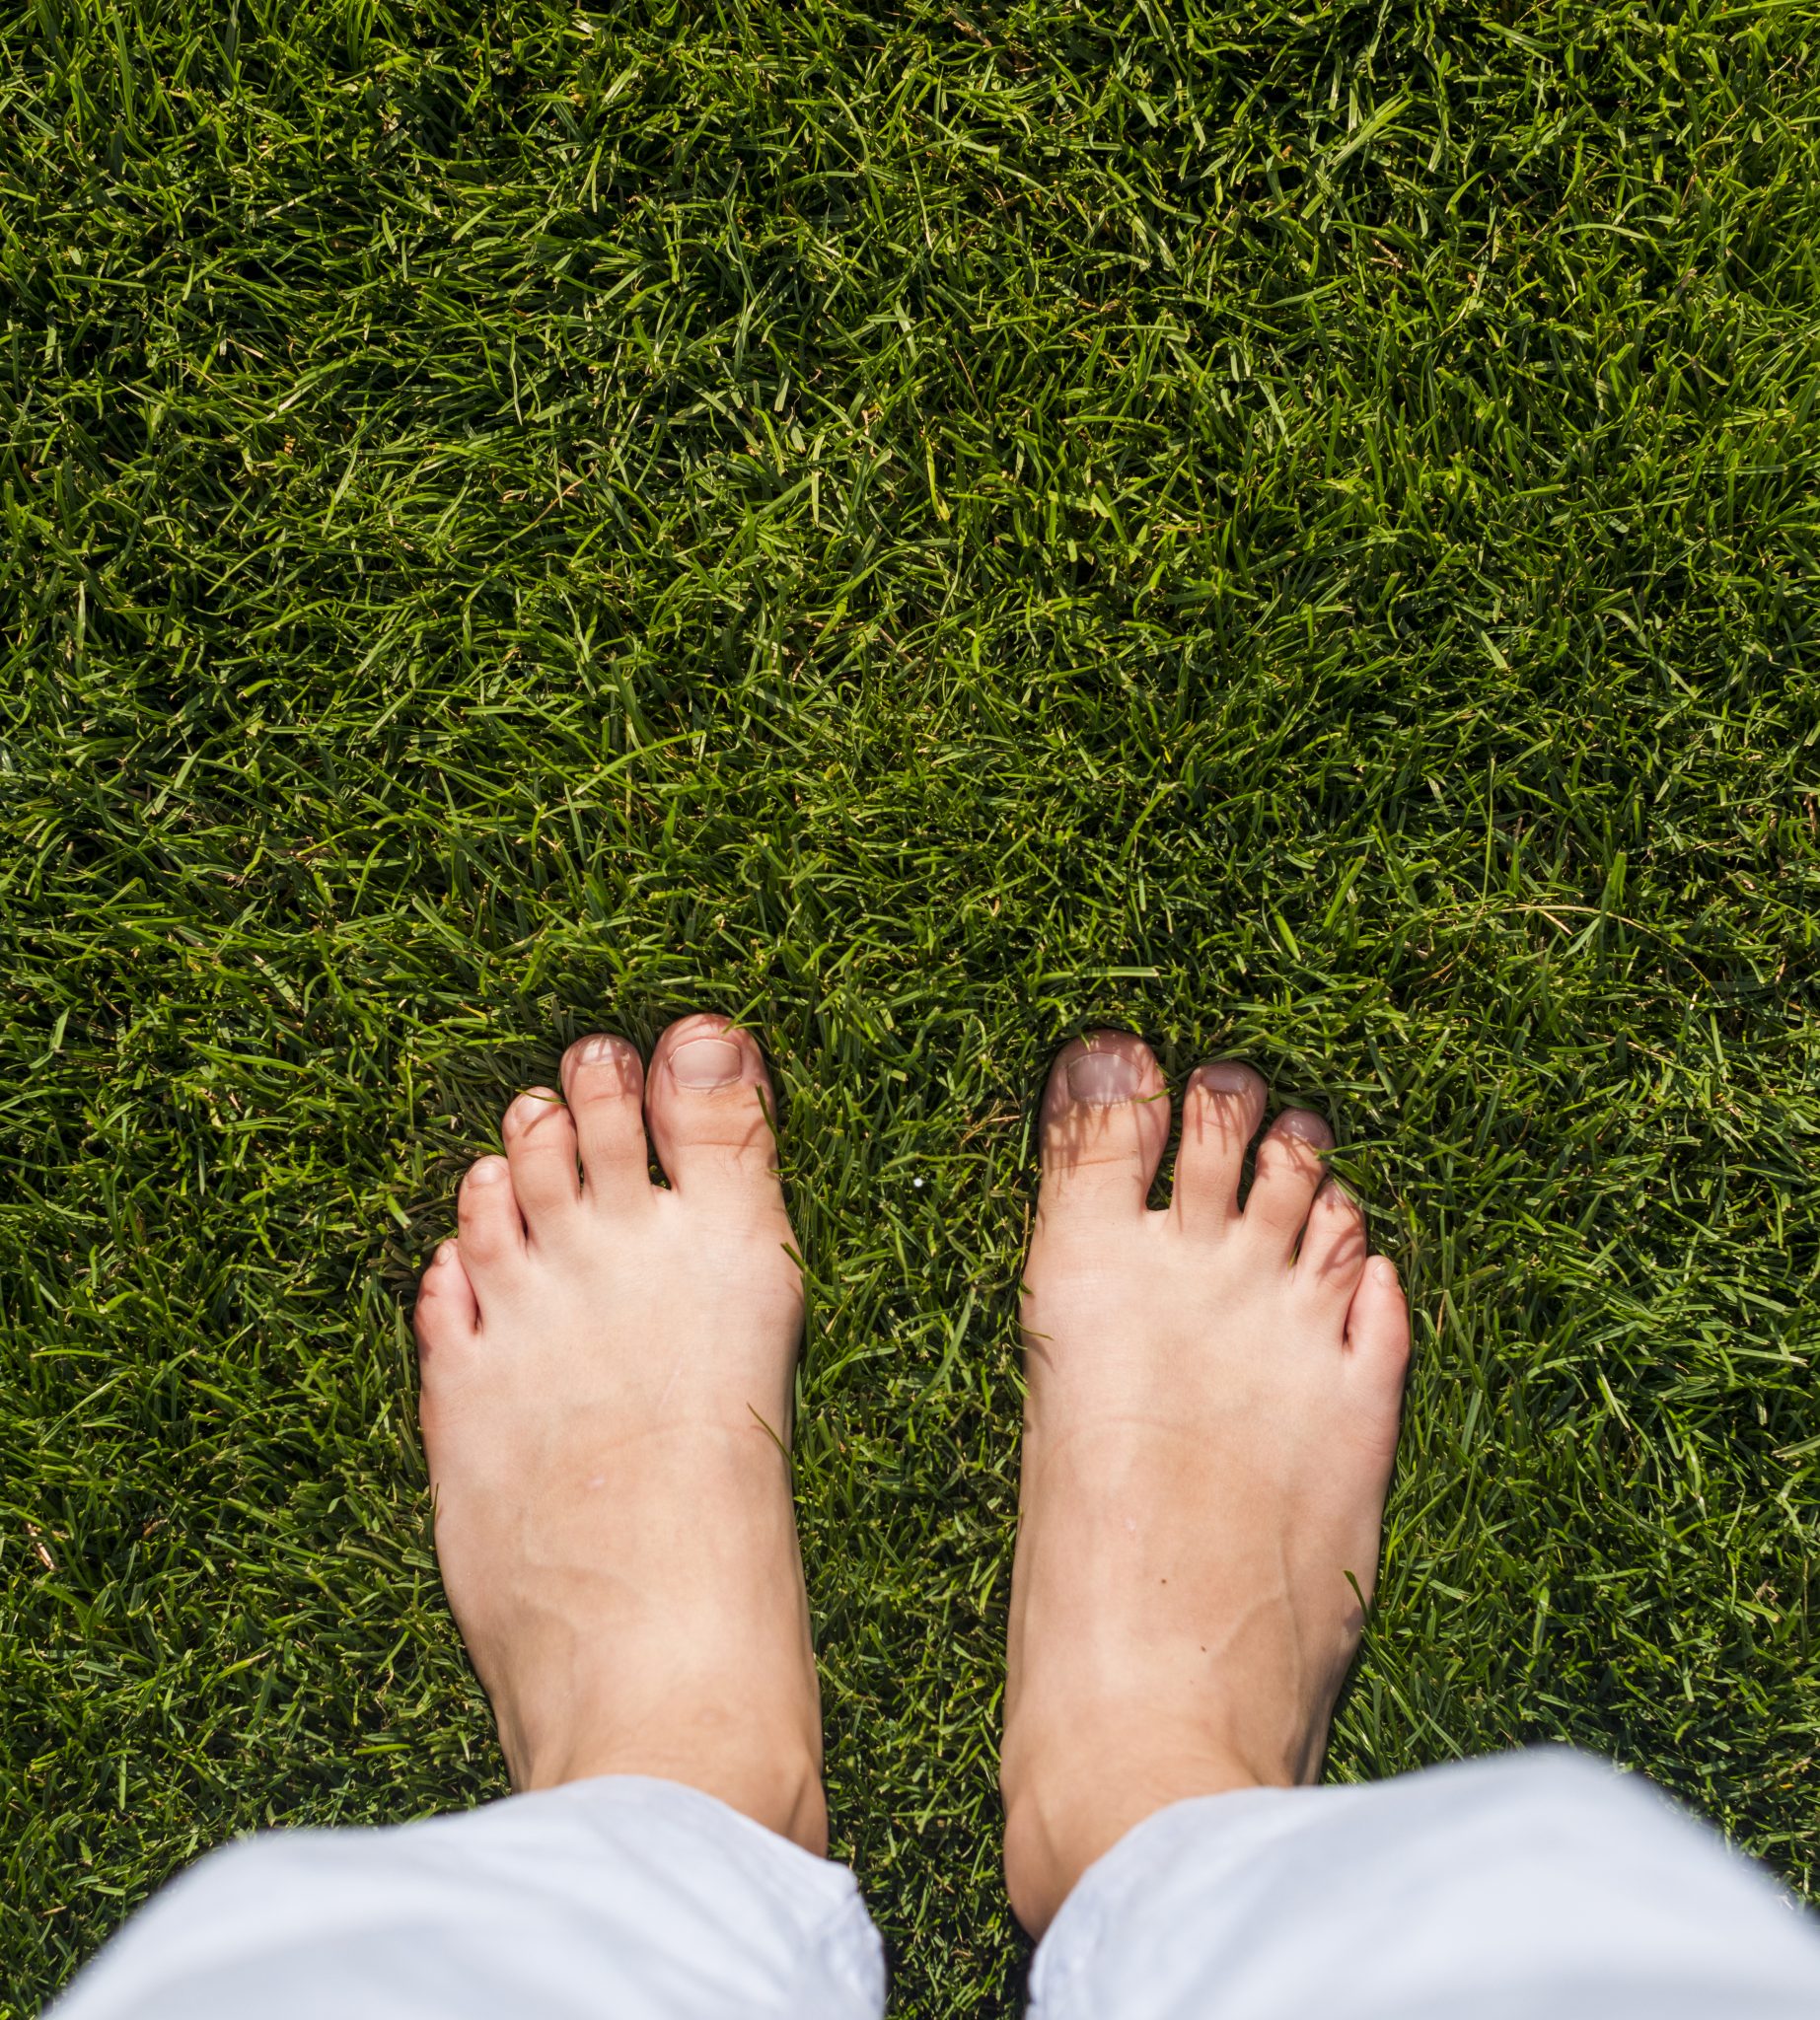 Feet картинка. Зеленые ноги. Ноги из травы. Трава под ногами. Ноги на траве фото.